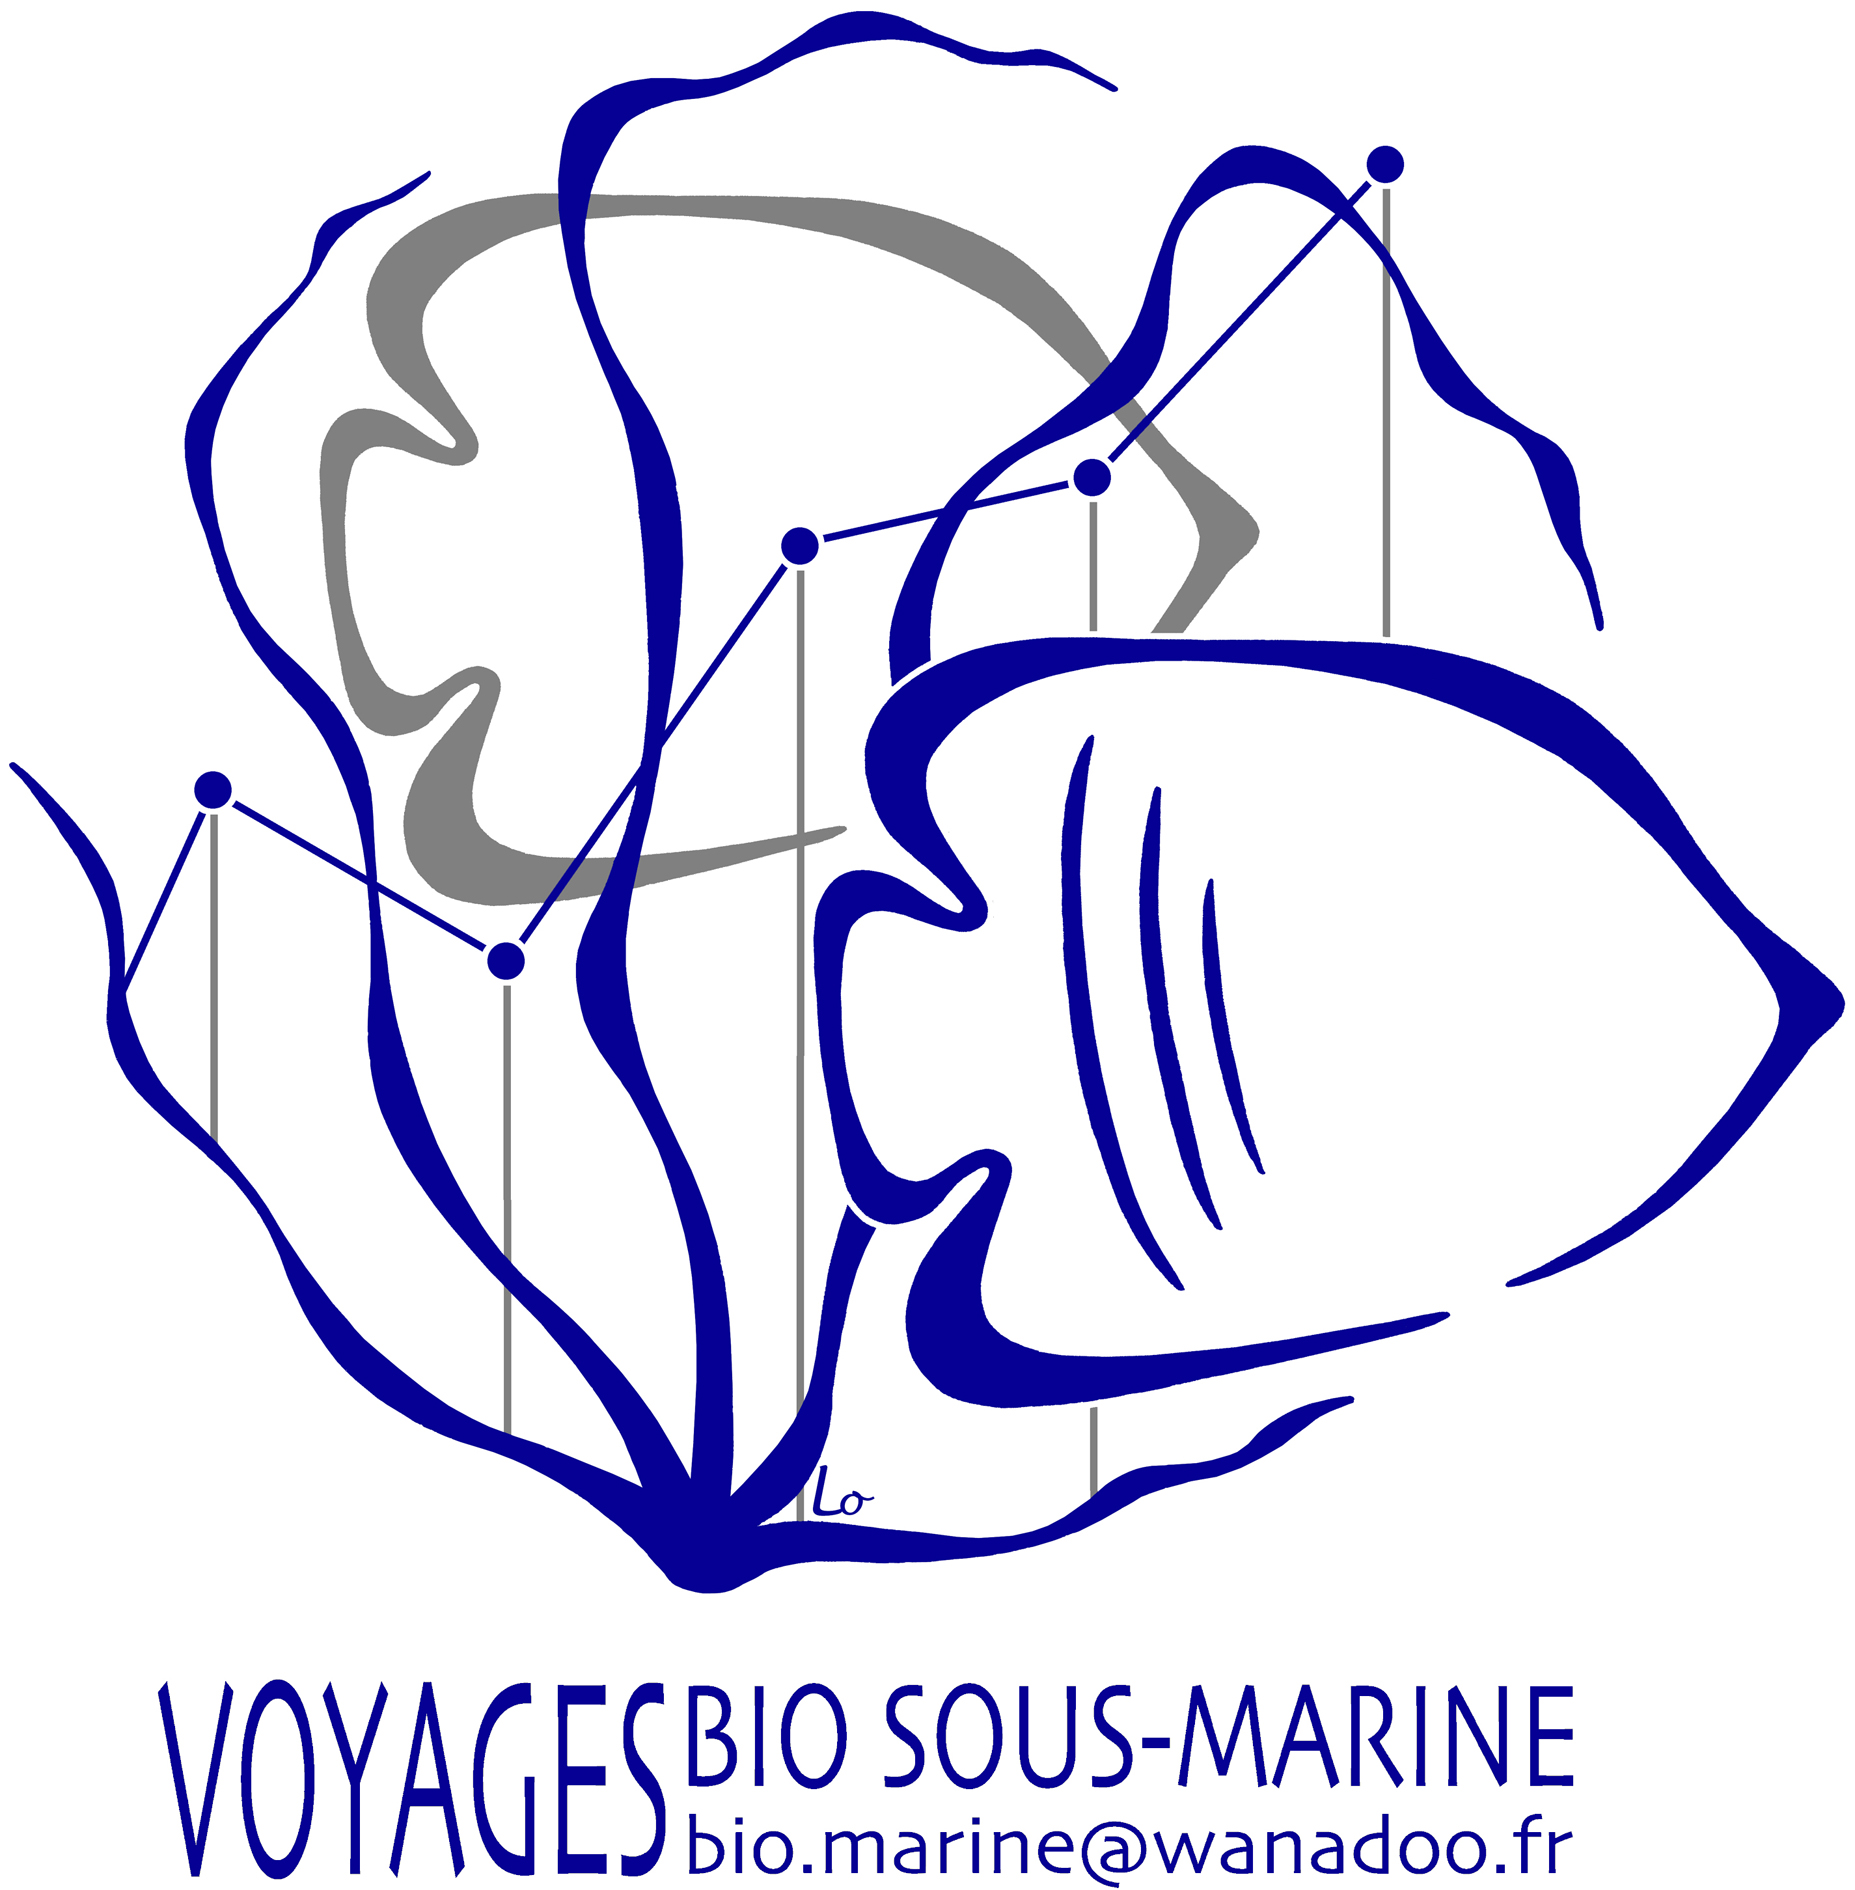 Voyages Bio Sous-Marine